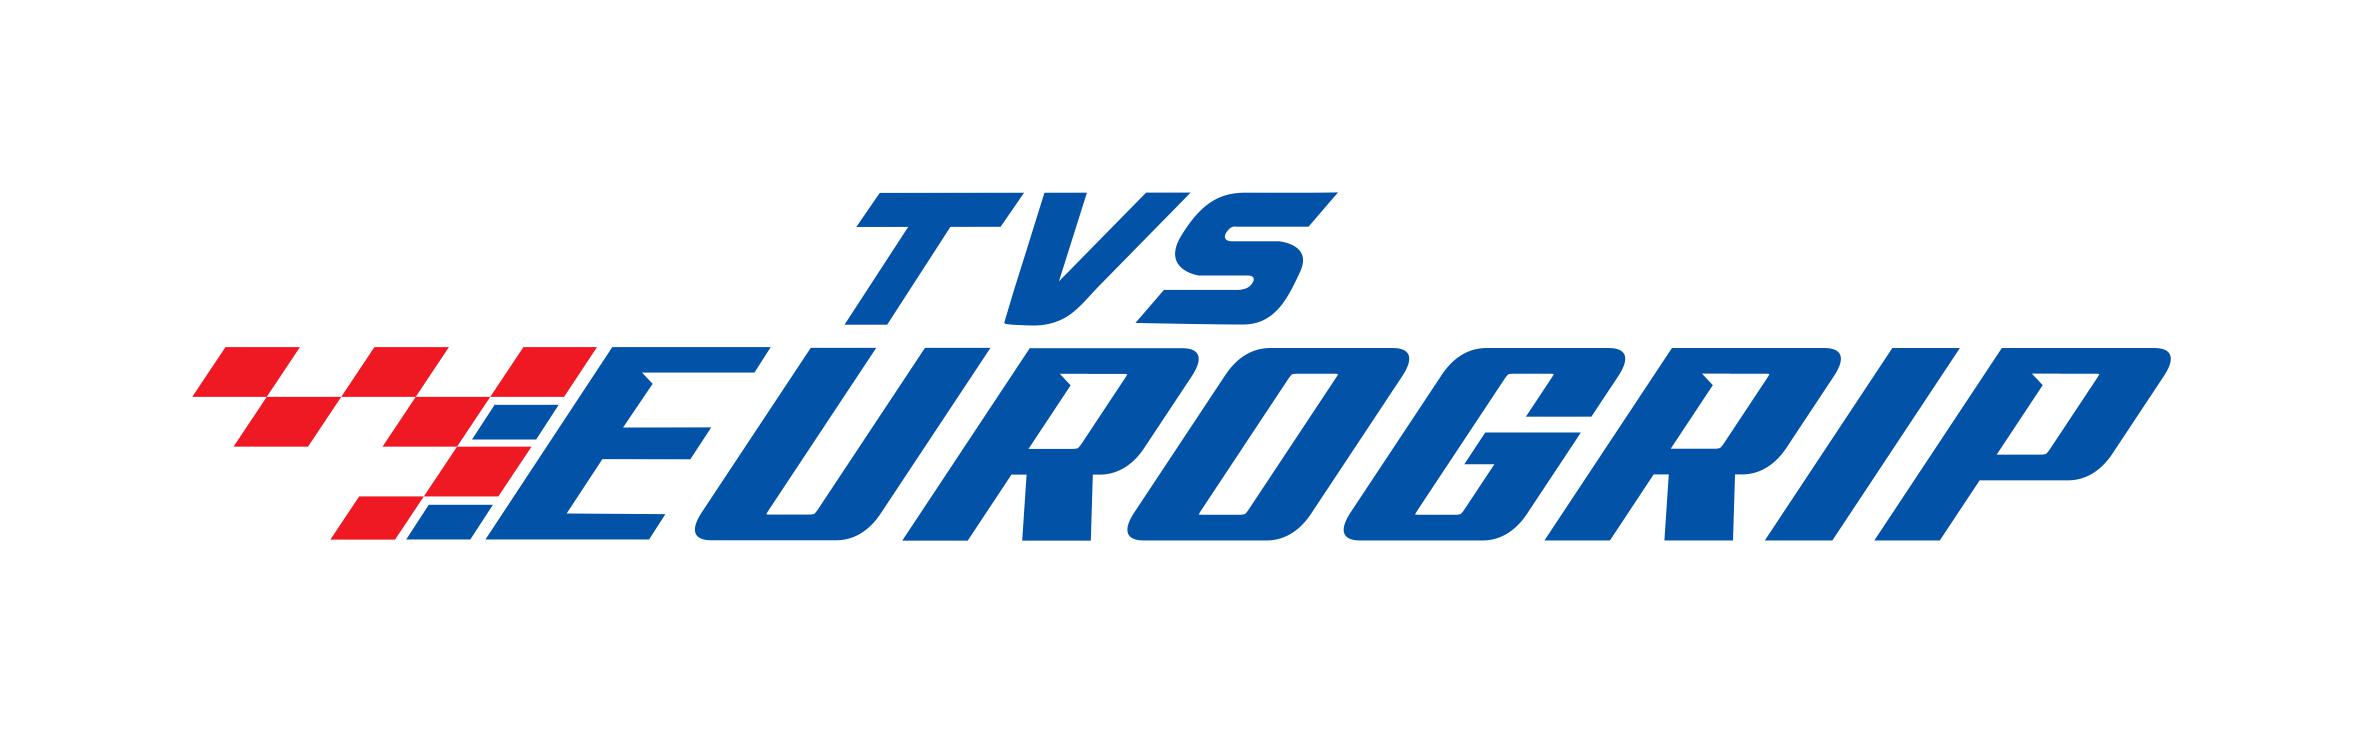 TVS Srichakra enters Europe Two-Wheeler Tyre market with exclusive product range under Eurogrip brand decoding=